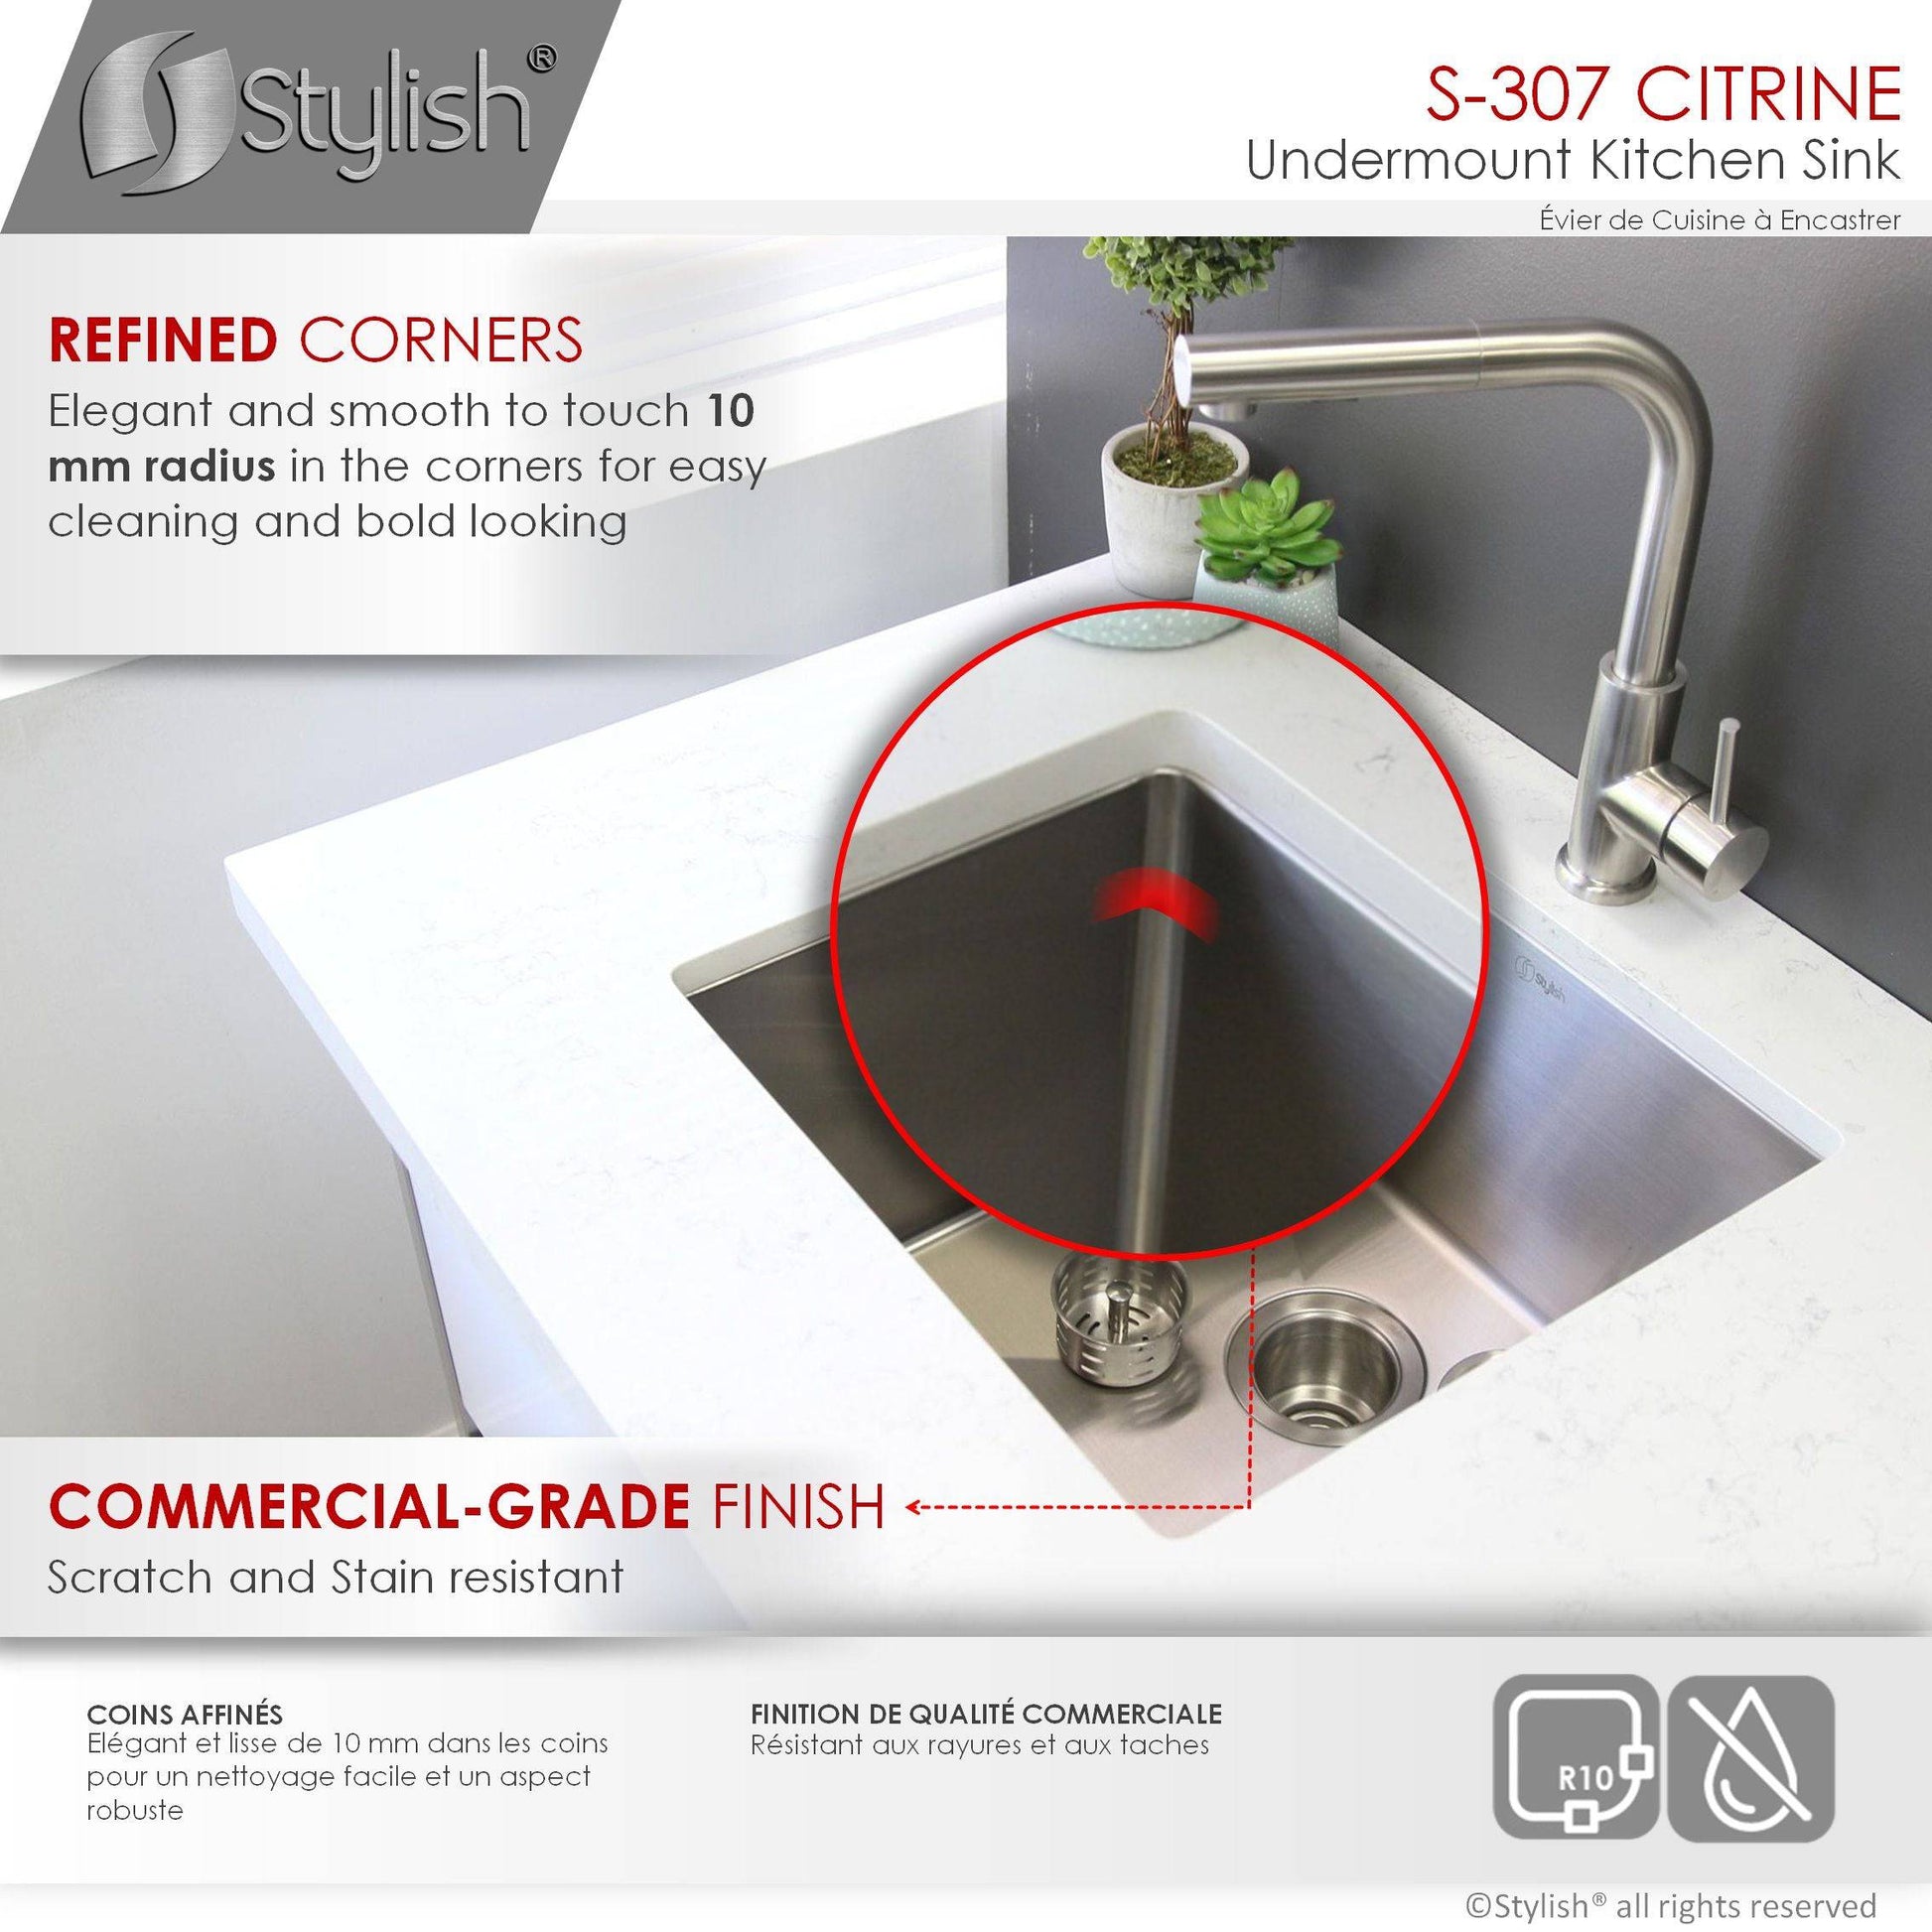 Stylish Citrine 23" x 18" Single Bowl Undermount Stainless Steel Kitchen Sink S-307XG - Renoz